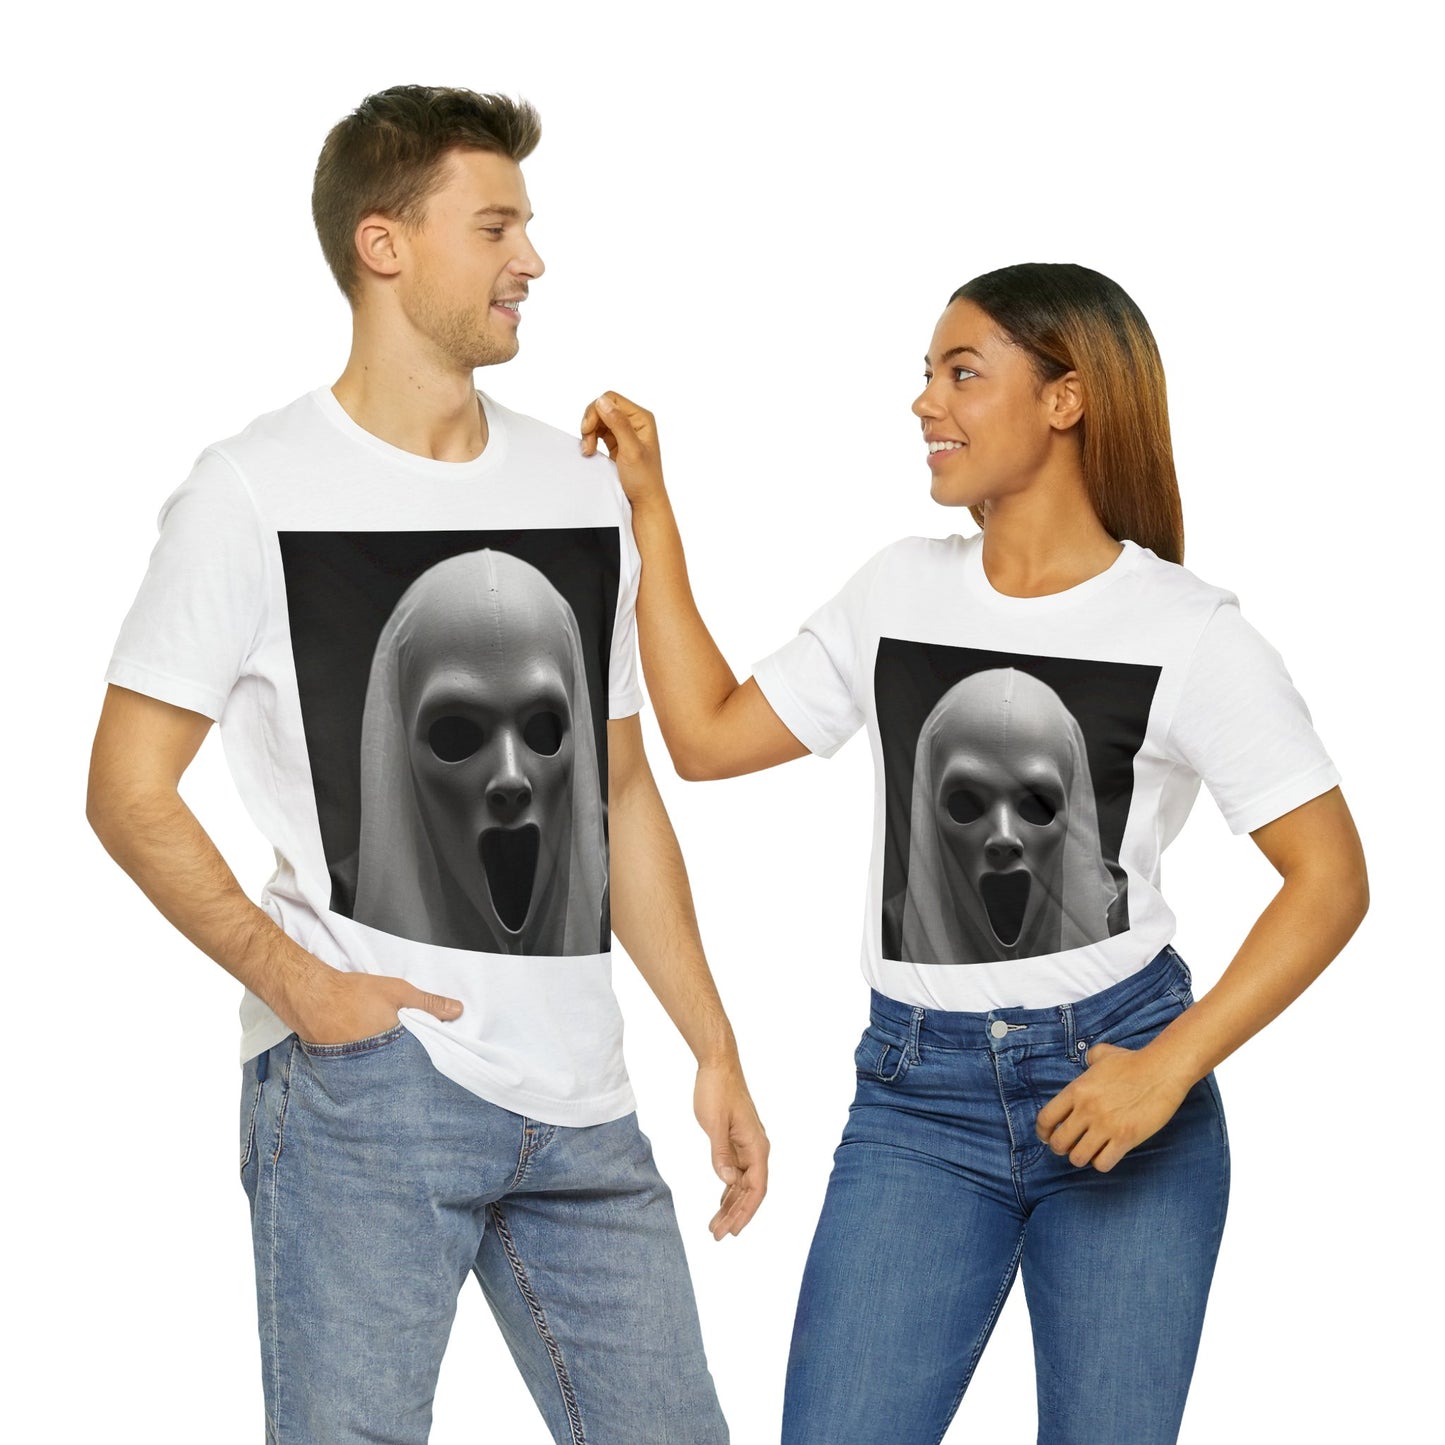 Death Mask | Creepy | HD Graphic | Horrorcore | Goth |  Unisex | Men's | Women's | Tee | T-Shirt